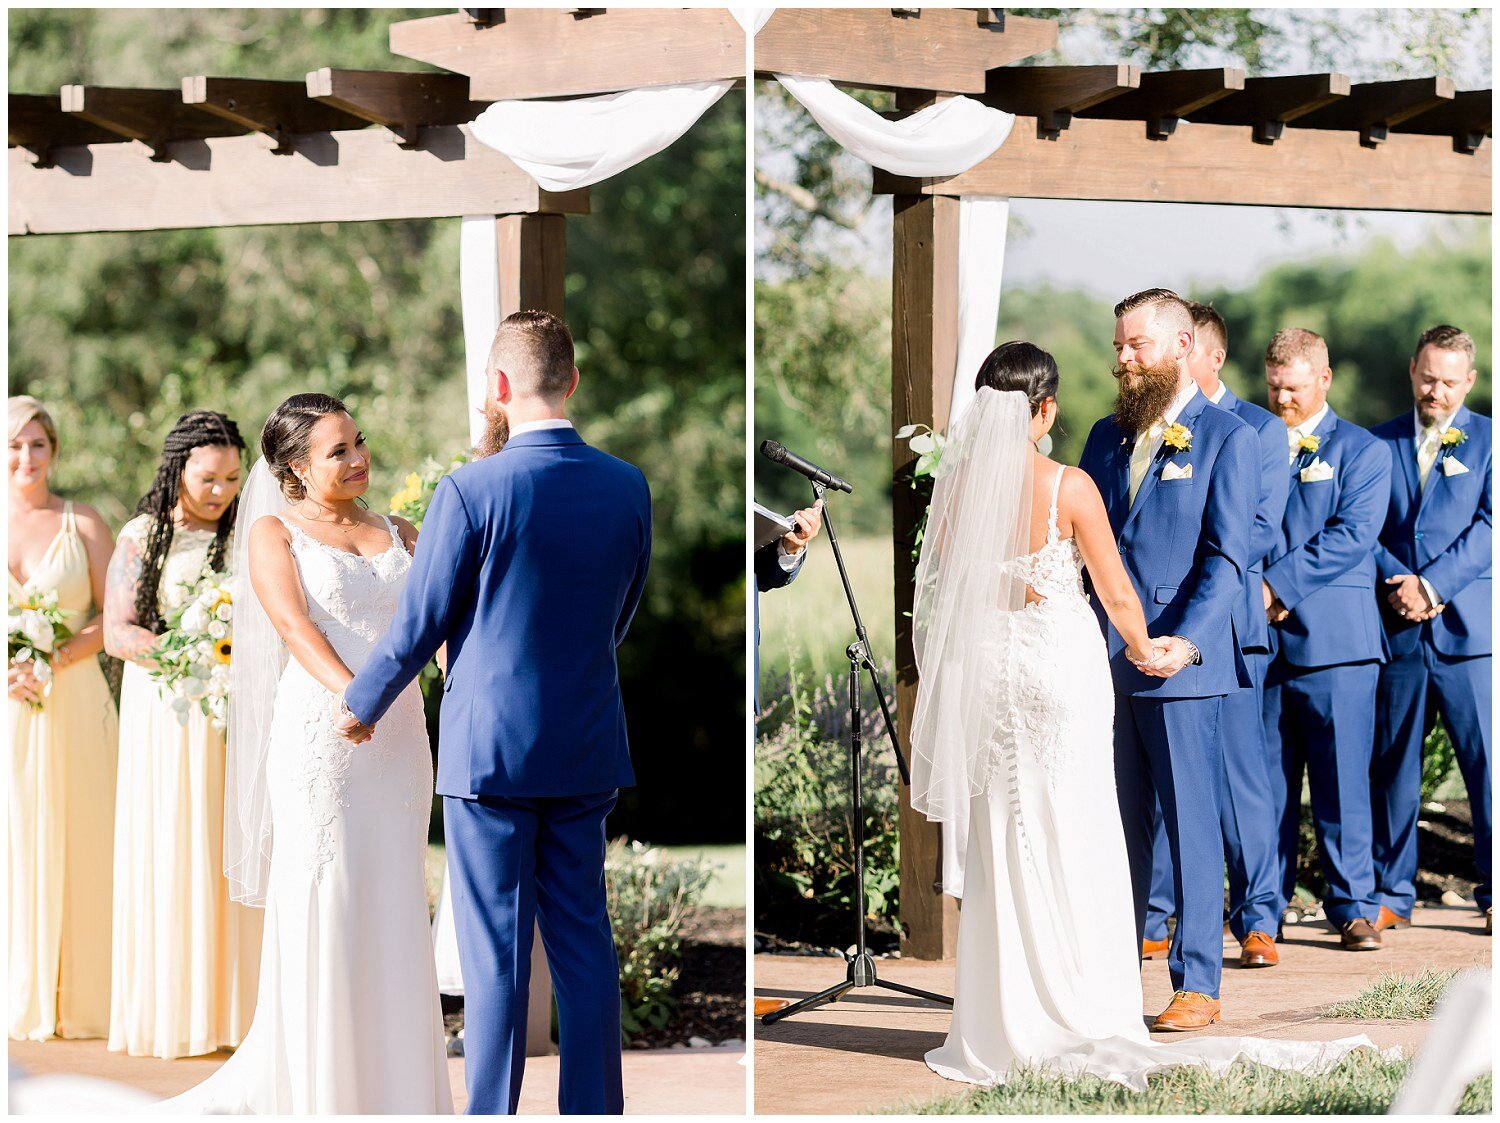 Yellow-and-Navy-Summer-Outdoor-Wedding-The-Legacy-Kansas-City-B+C-08-2020-Elizabeth-Ladean-Photography-photo-_5482.jpg